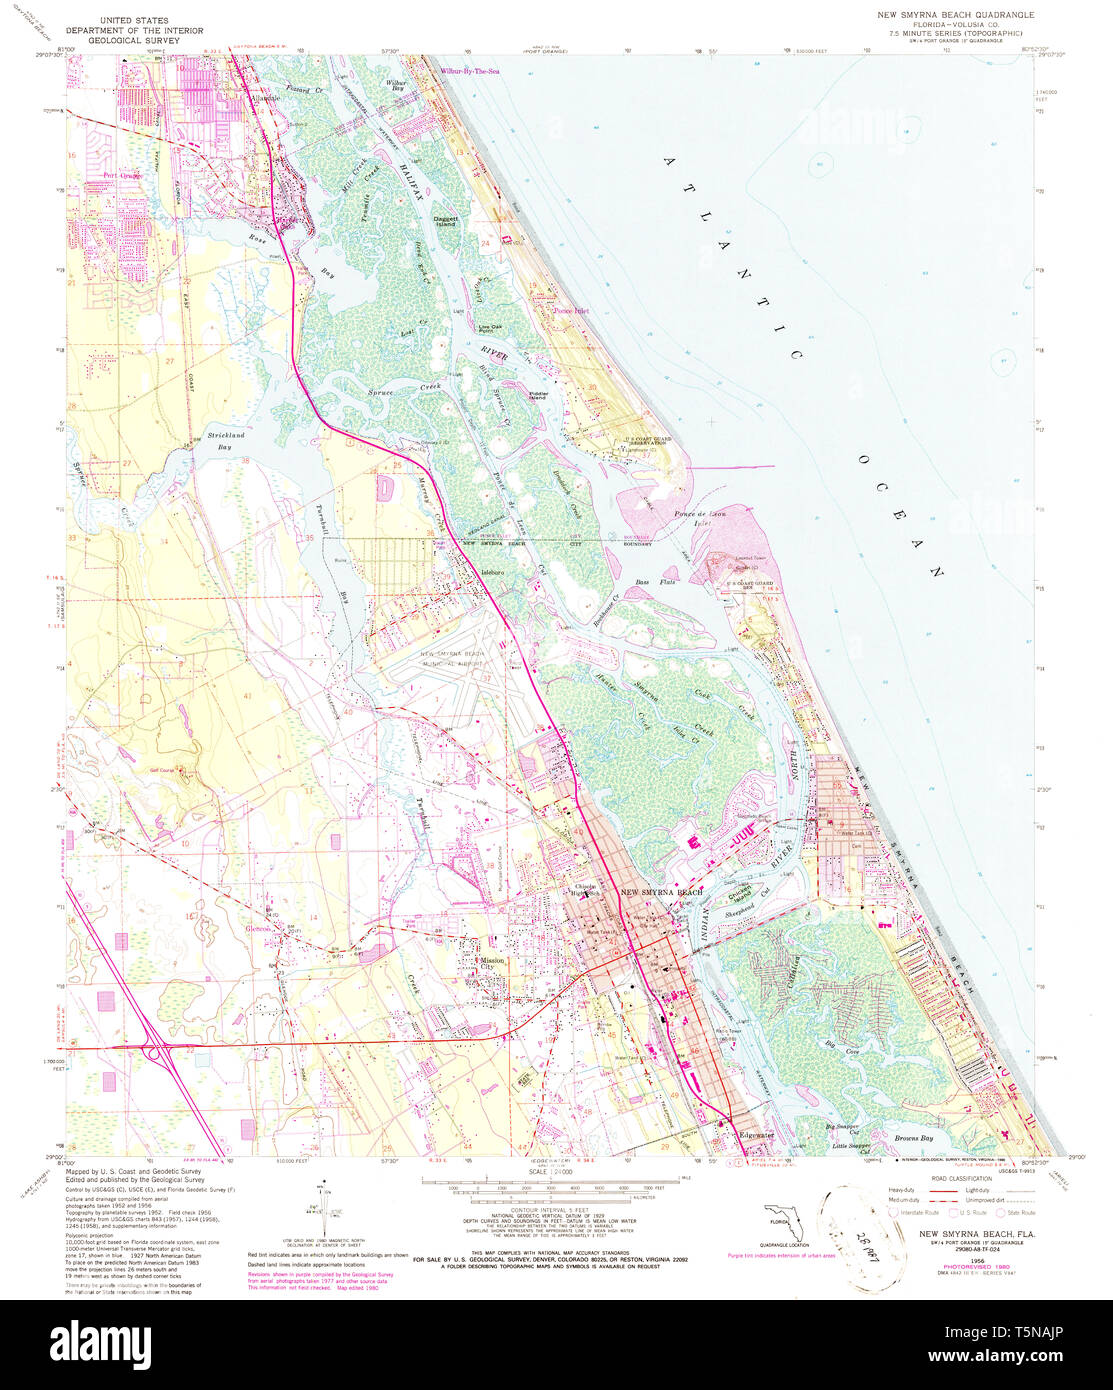 Usgs Topo Map Florida Fl New Smyrna Beach 1956 Restoration Stock Photo Alamy